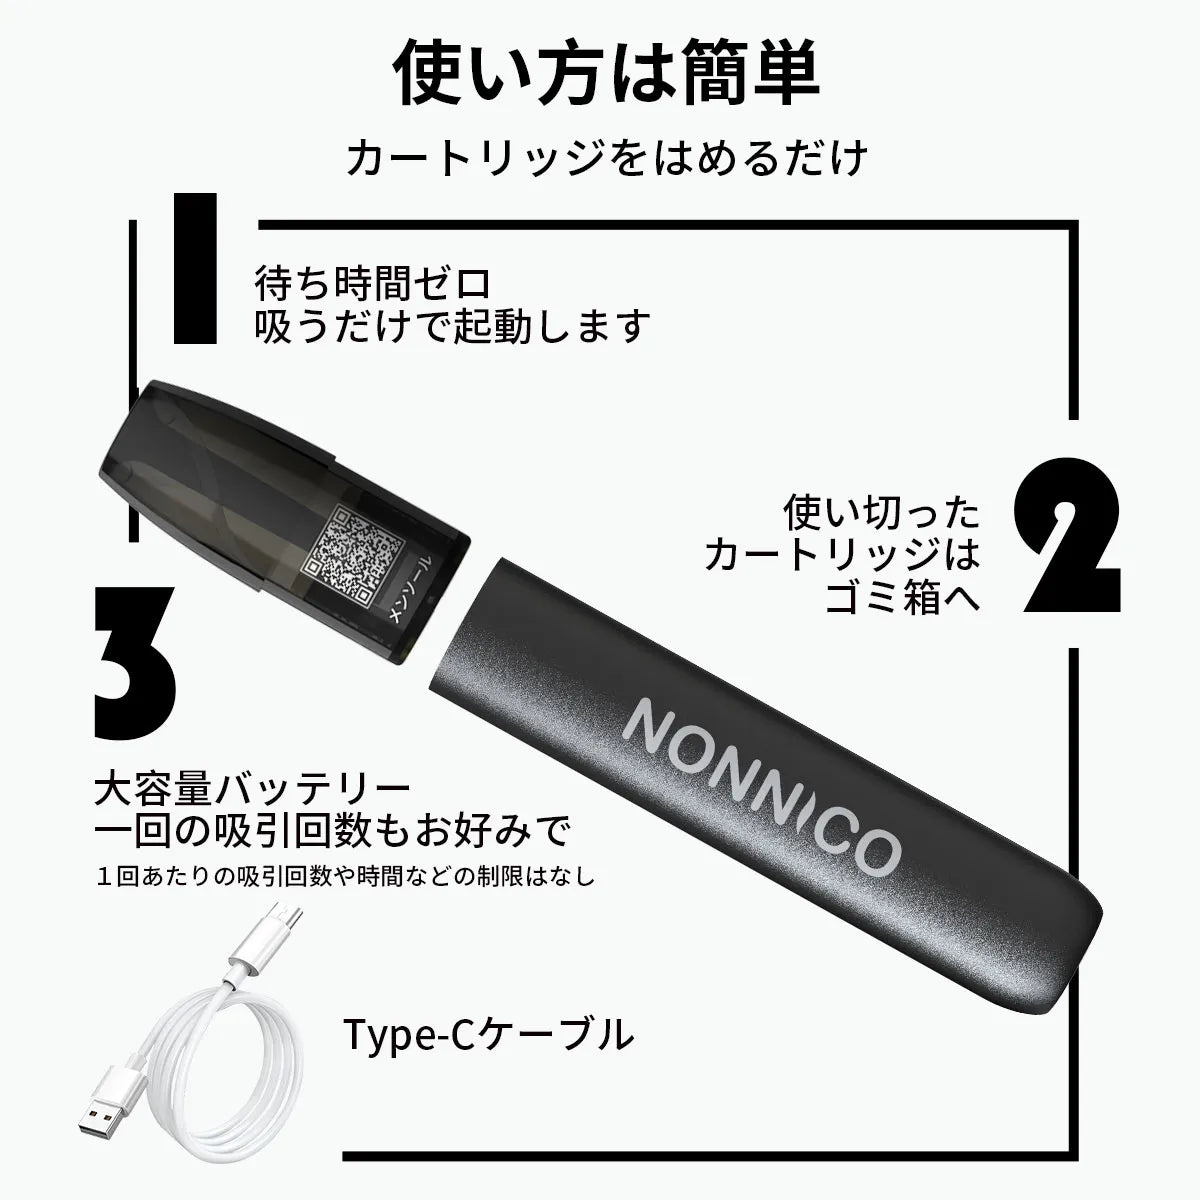 NONNICO Alpha POD型電子タバコ ブラック